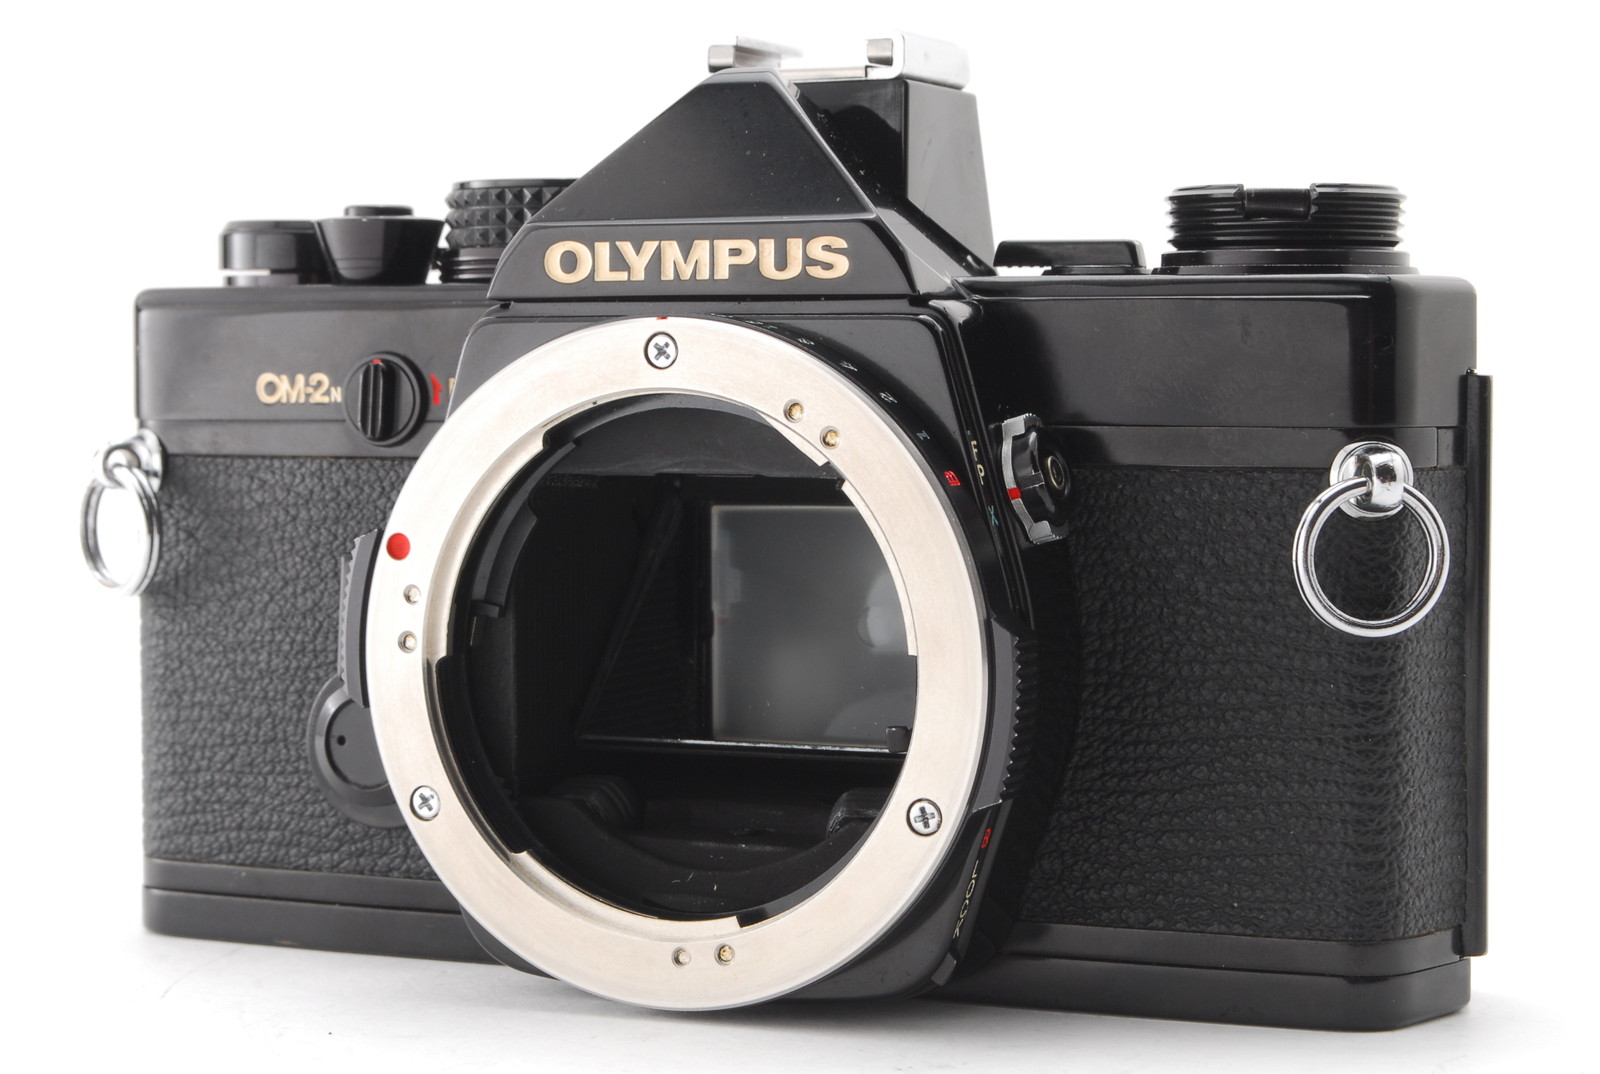 PROMOTION. NEAR MINT Olympus OM-2N 35mm Film Camera Black SLR from Japan